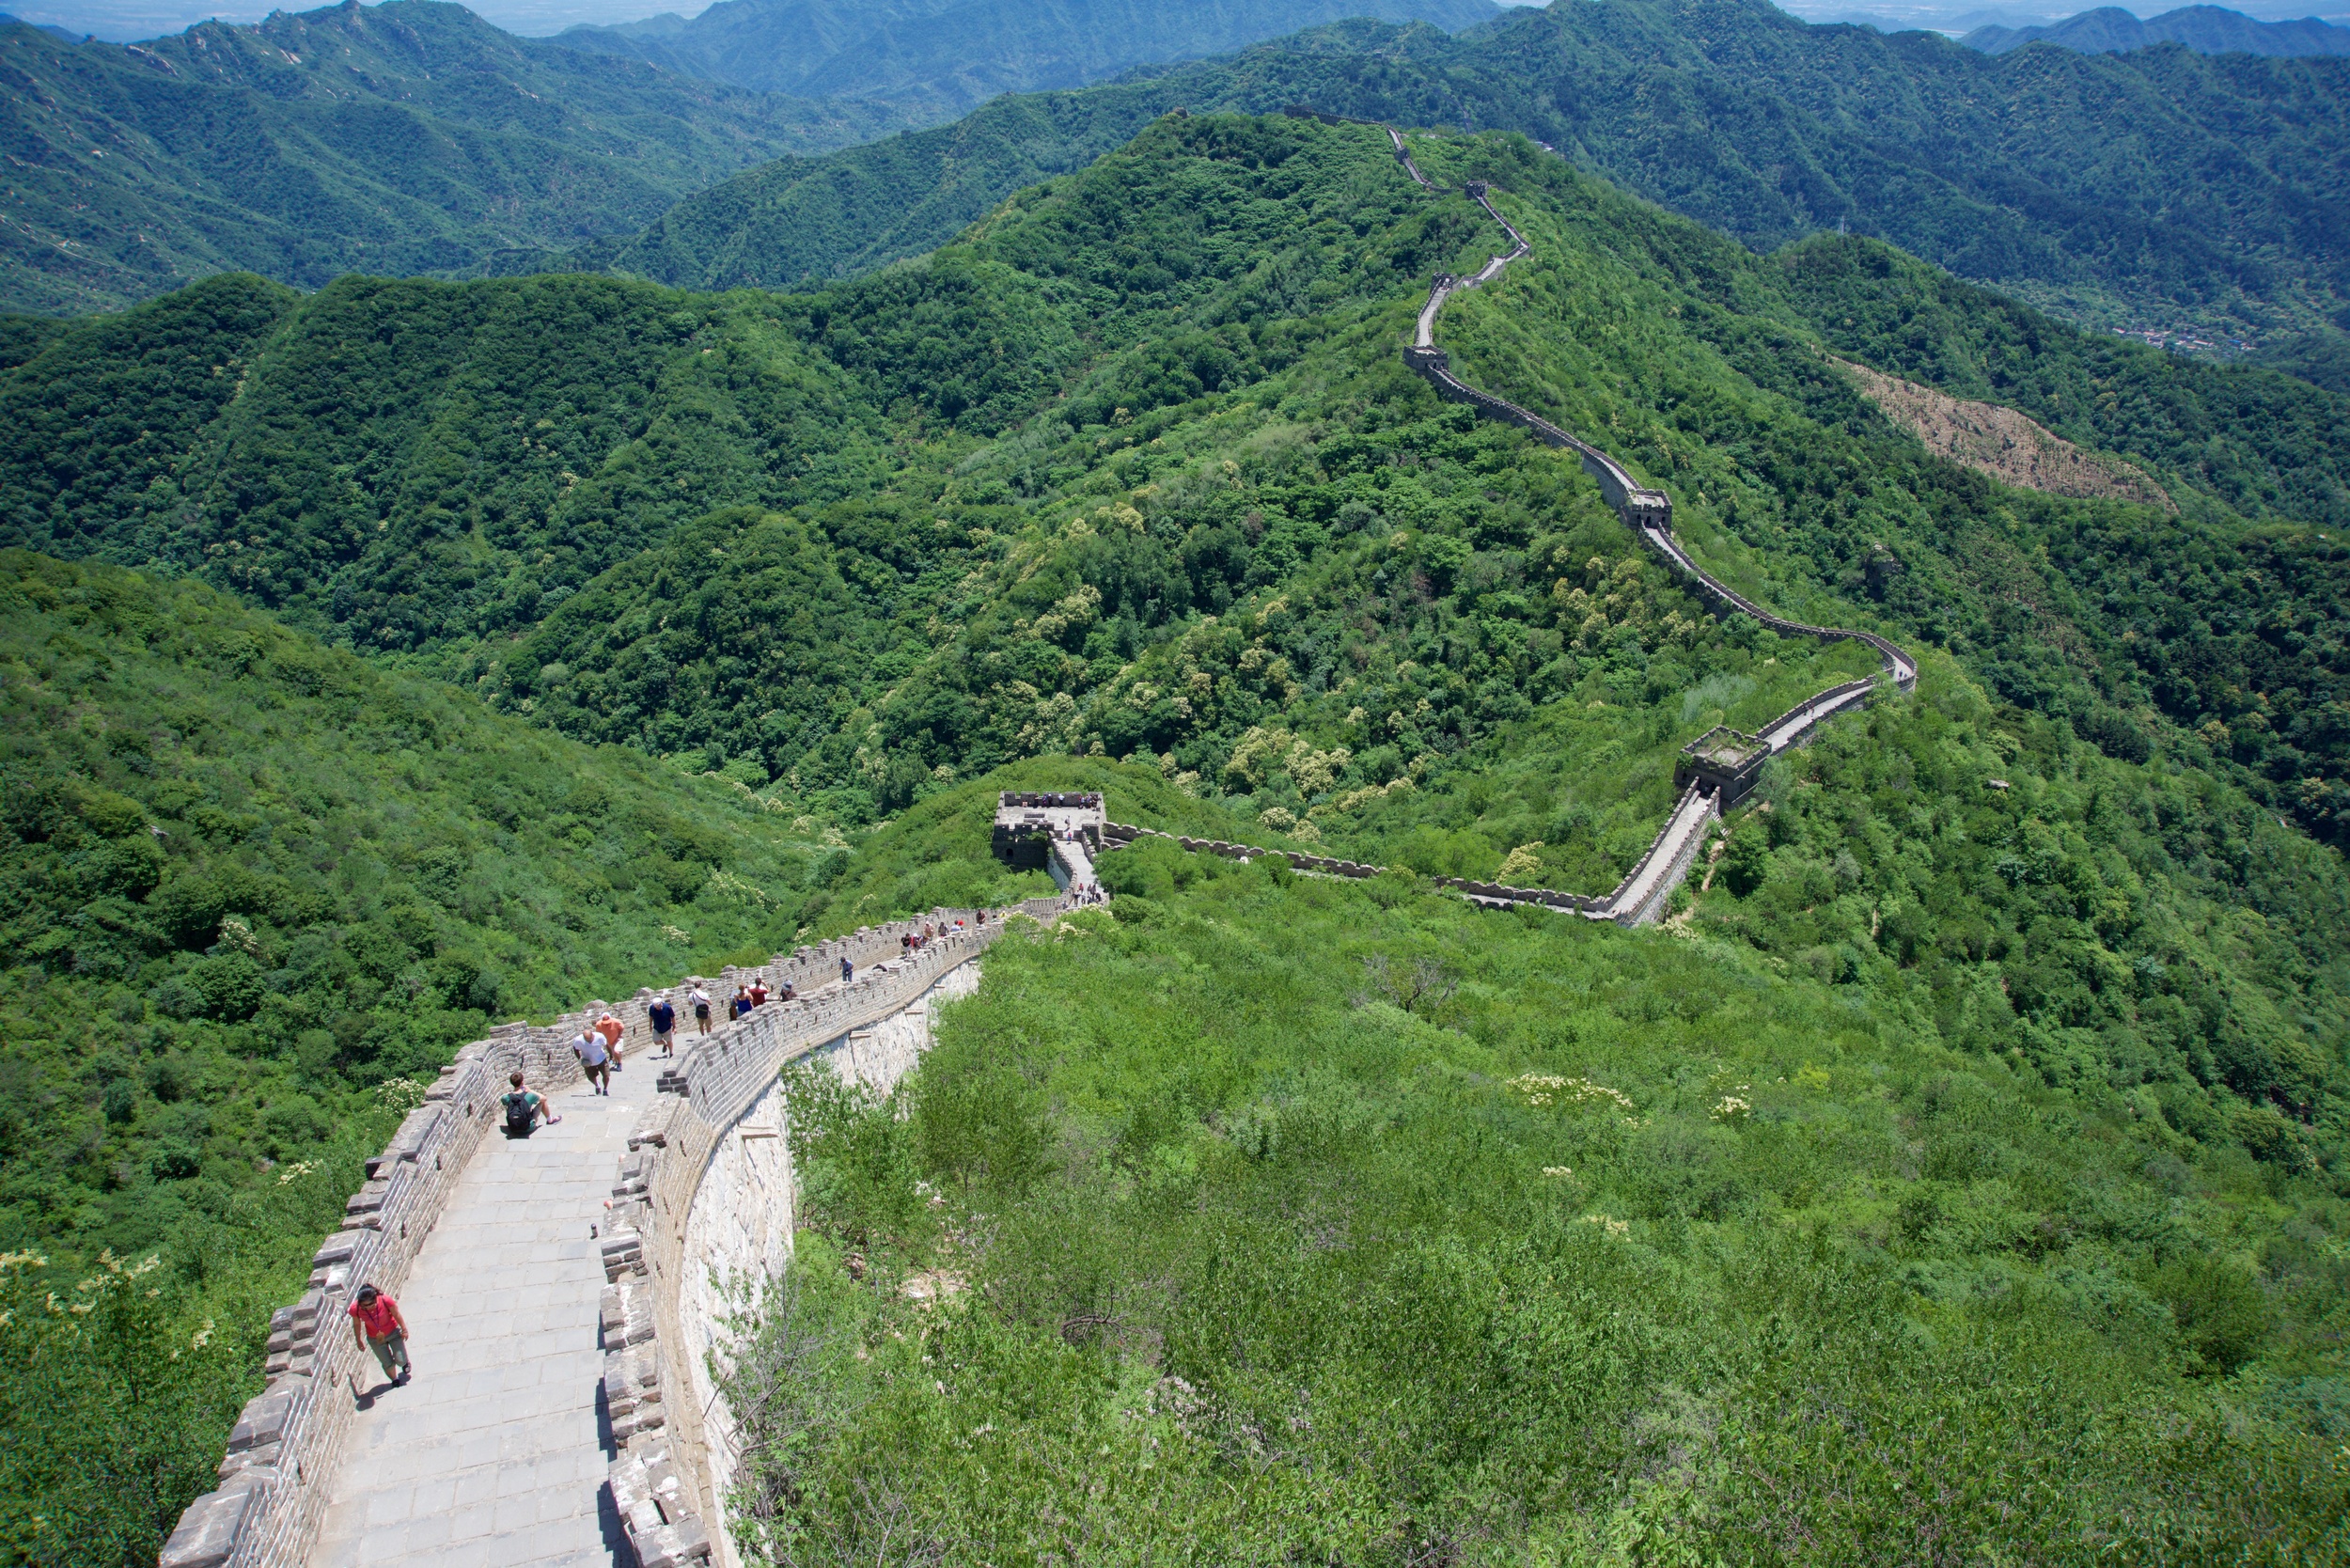  The Great Wall, Mutianyu 